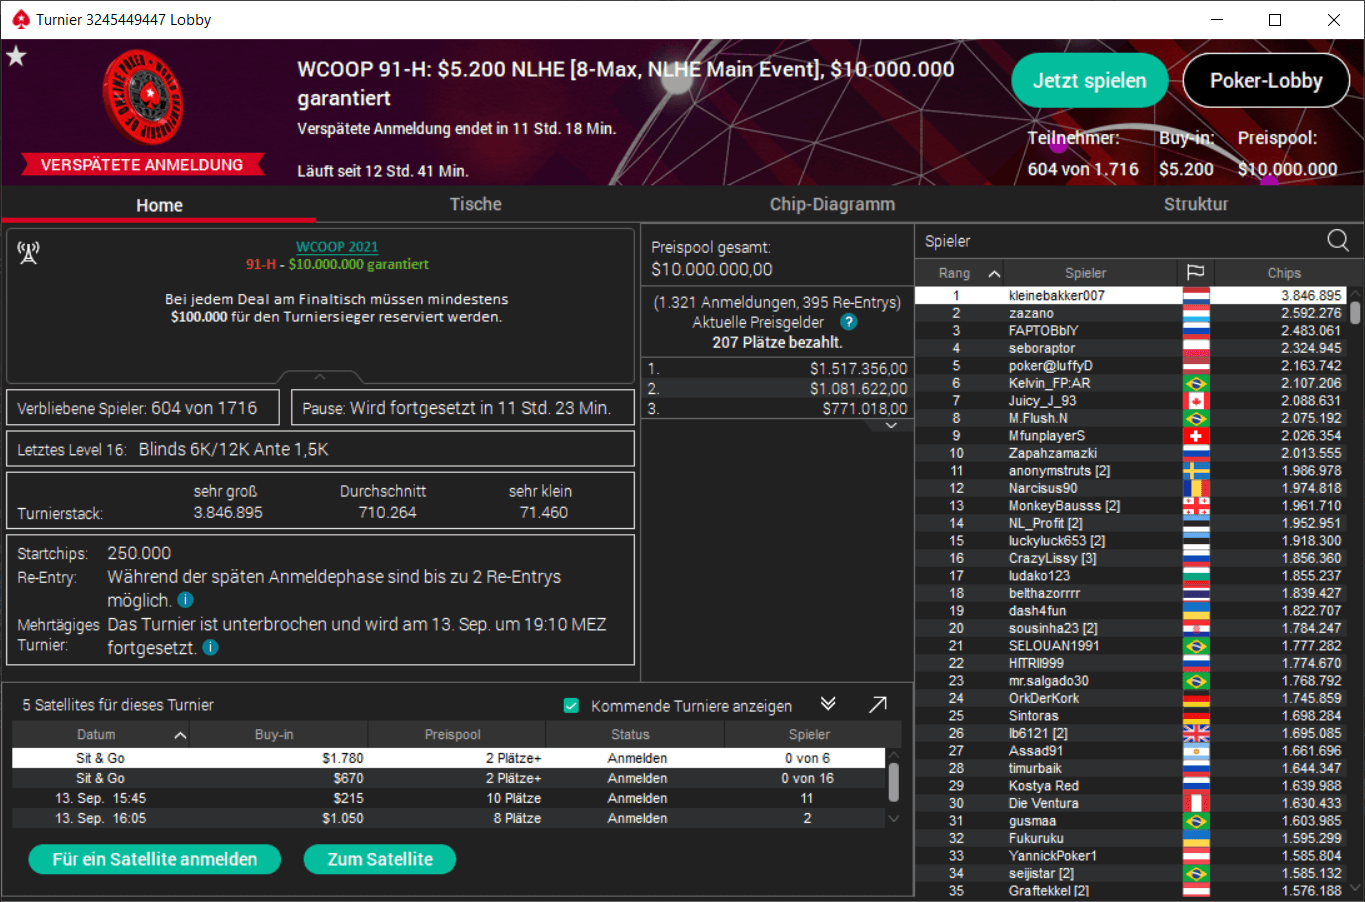 MTT Report - Aleksei Vandyshev wins WSOP Online Main for $2,543,073, kleinebakker007 leads WCOOP Main Event